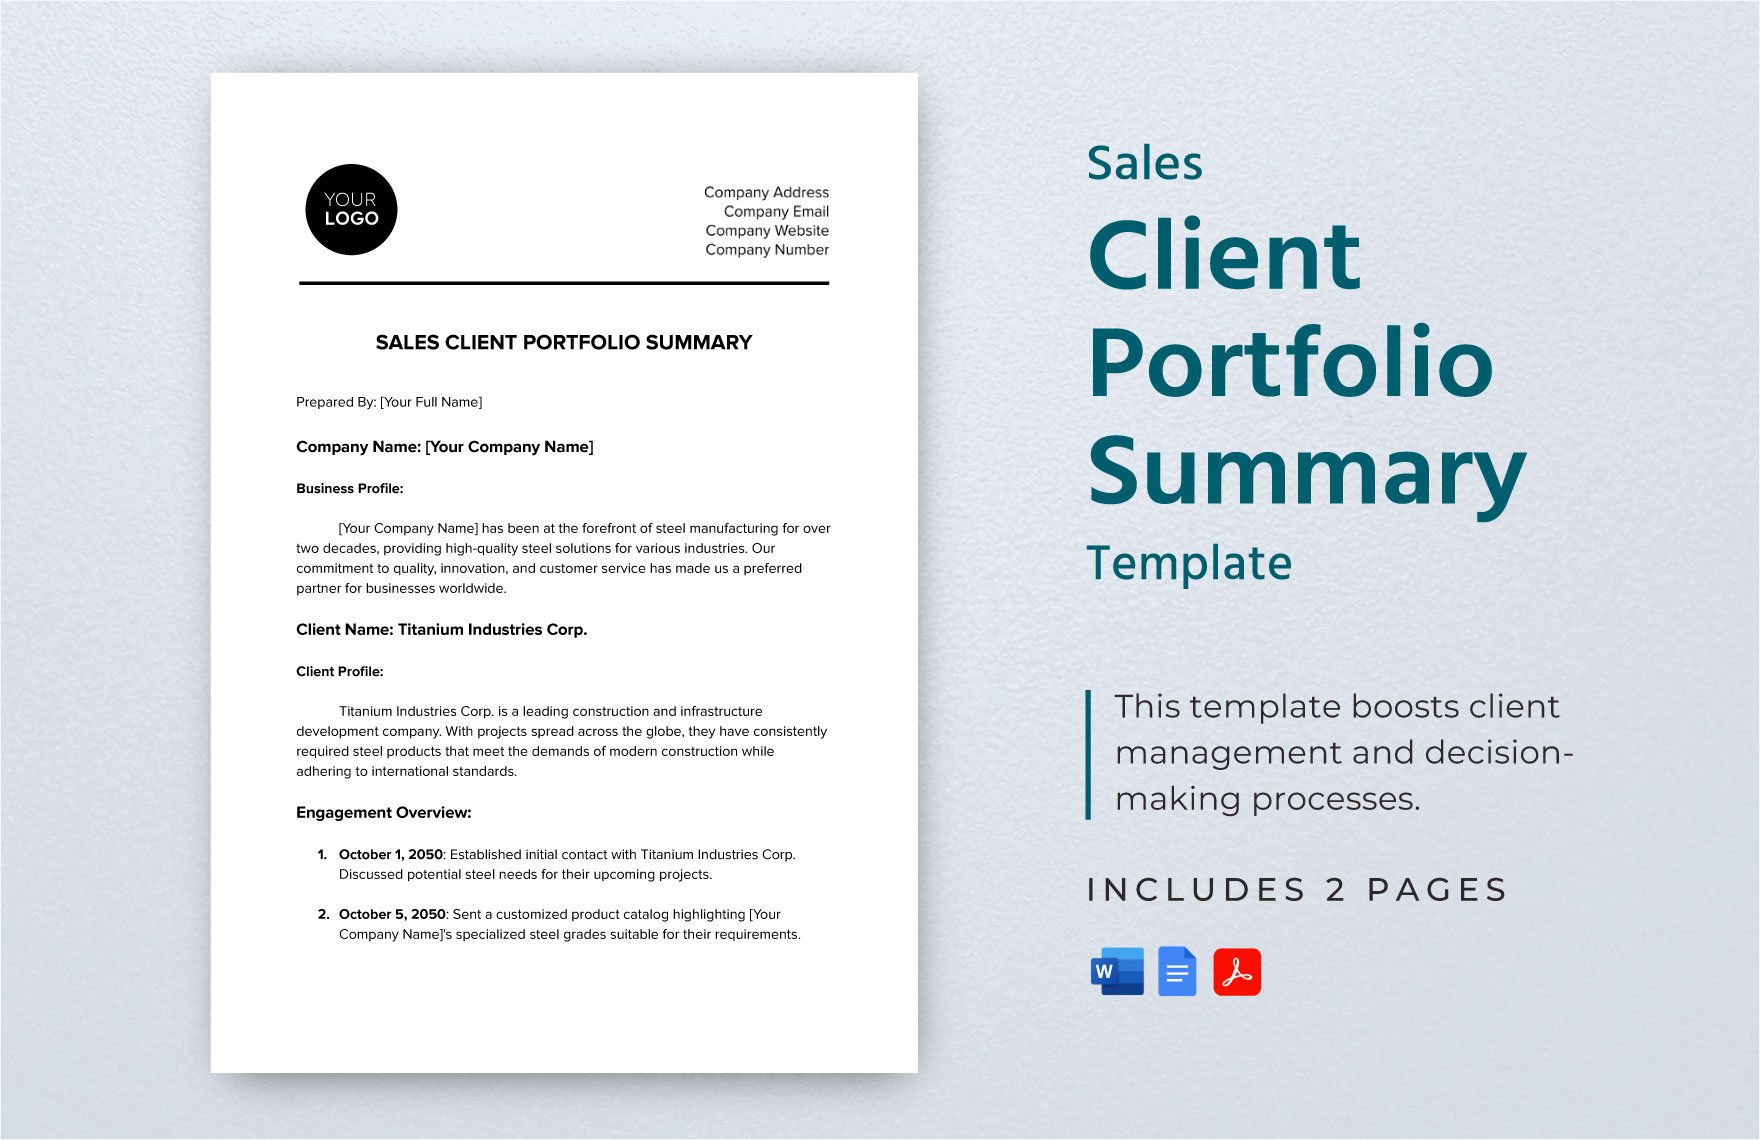 Sales Client Portfolio Summary Template